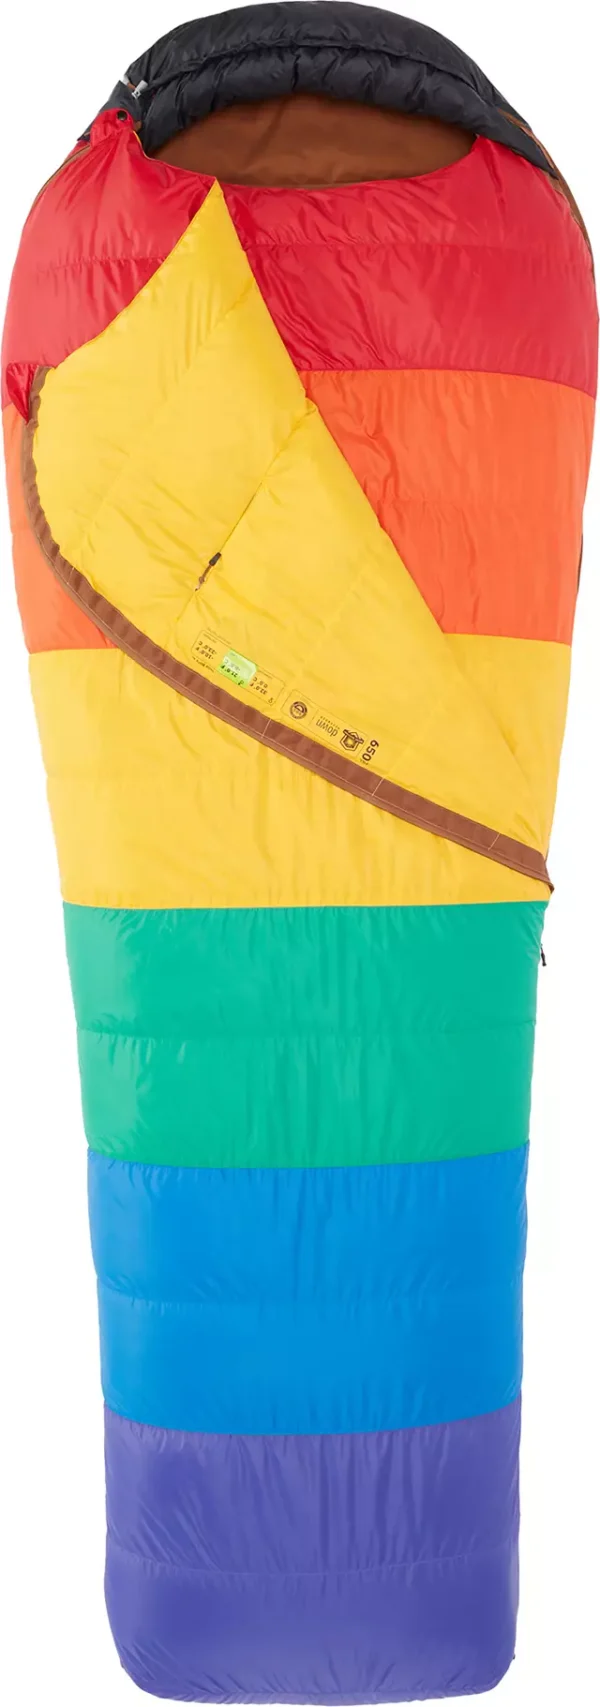 Marmot Rainbow Yolla Bolly 30 Sleeping Bag